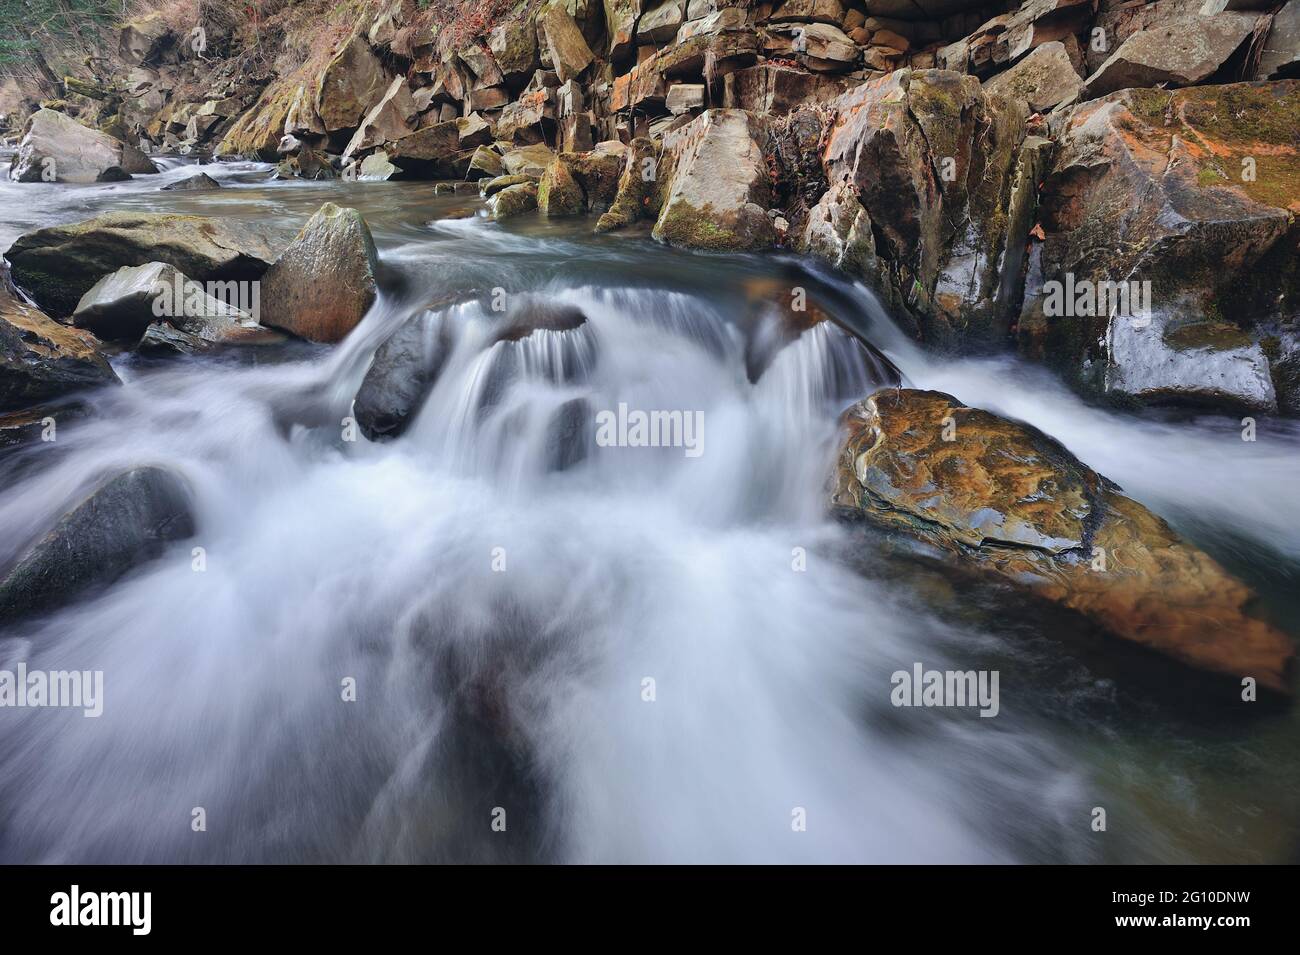 Kaskaden auf dem Fluss Kamjanka, Karpaten, Ukraine. Aufgenommen im Spätherbst. Stockfoto